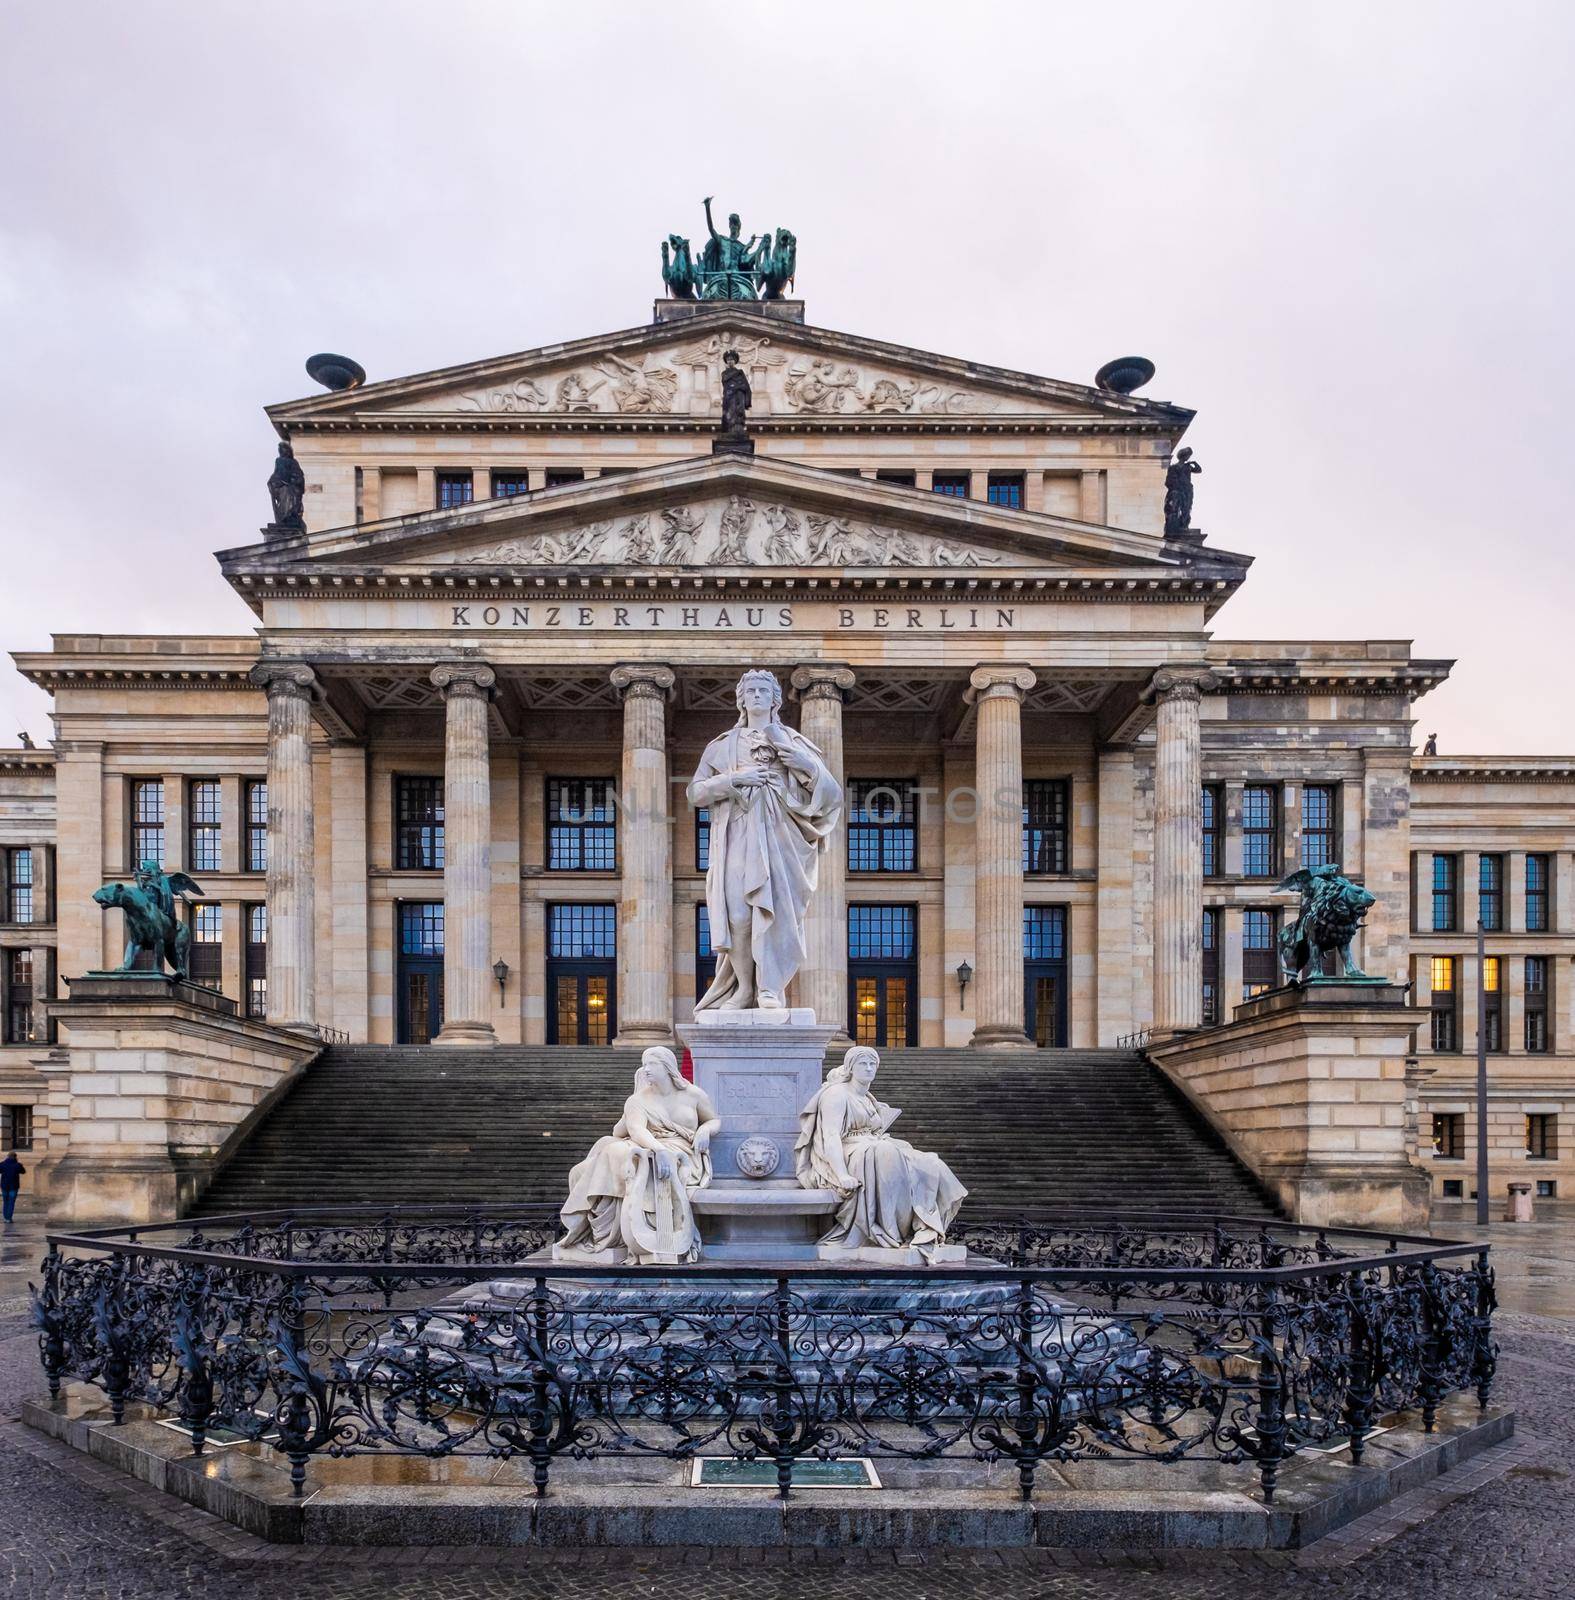 Monument at Concert Hall in Berlin by GekaSkr